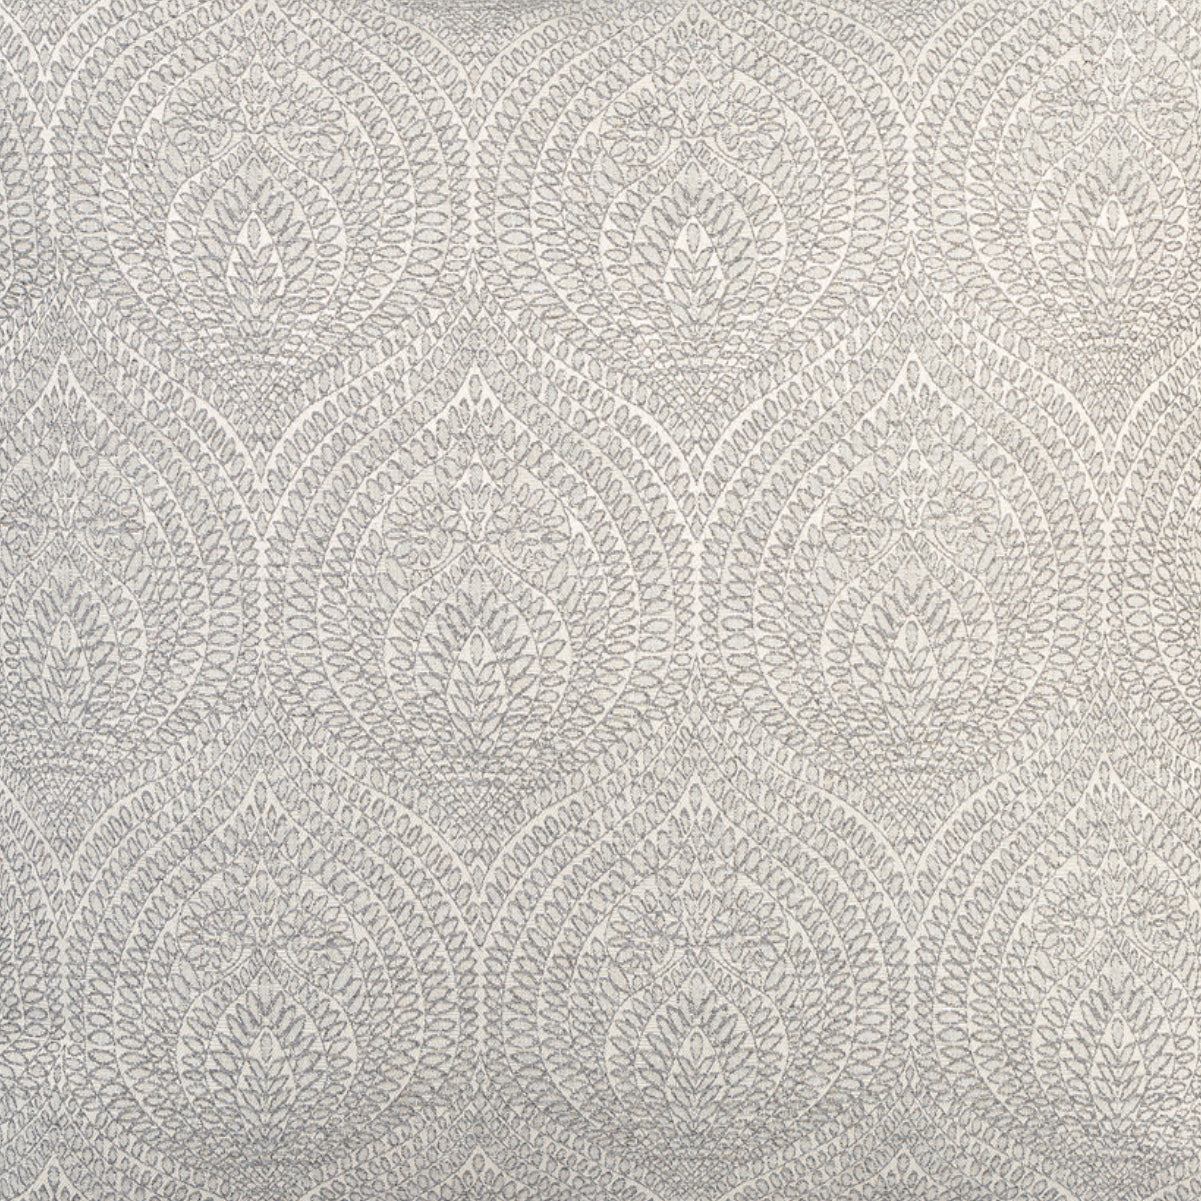 Cushion FJURI 50x50 Mandala's Pattern Grey